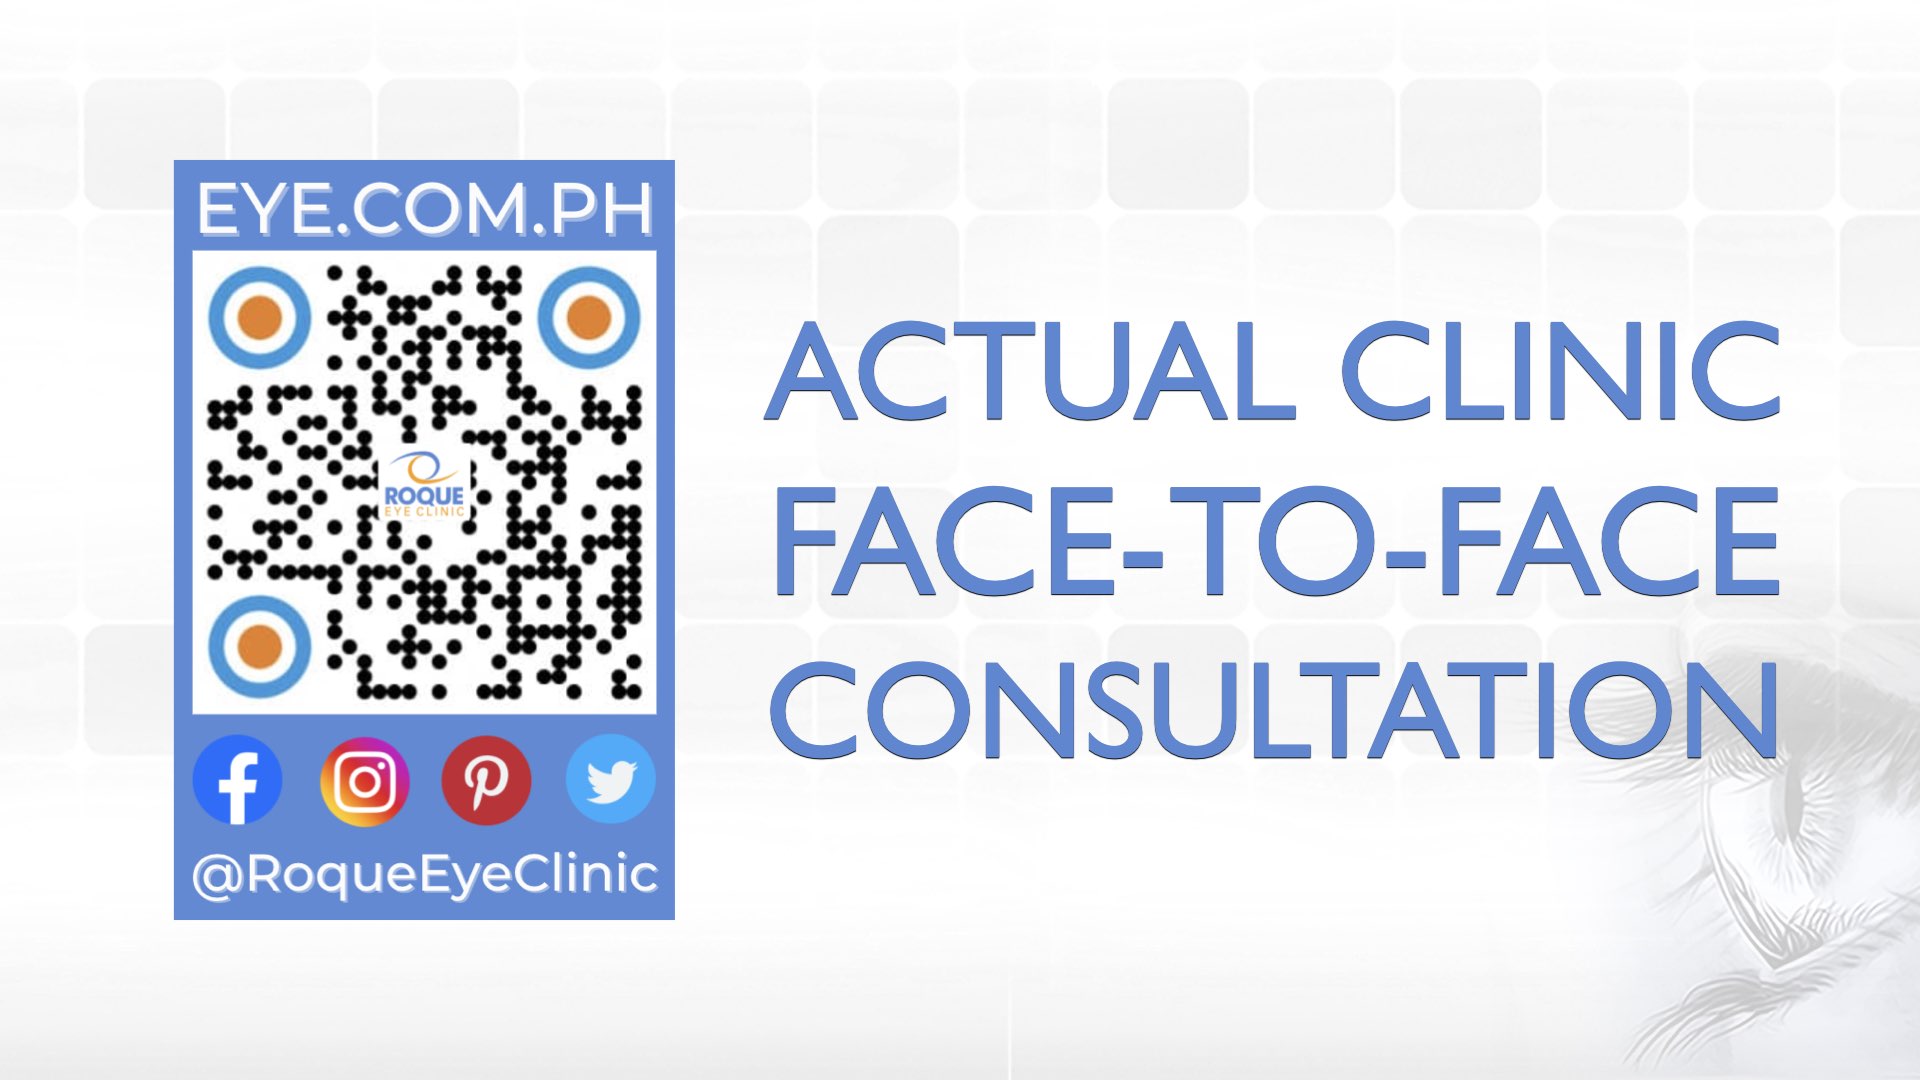 Actual Clinic Face-to-Face Consultation | ROQUE Eye Clinic